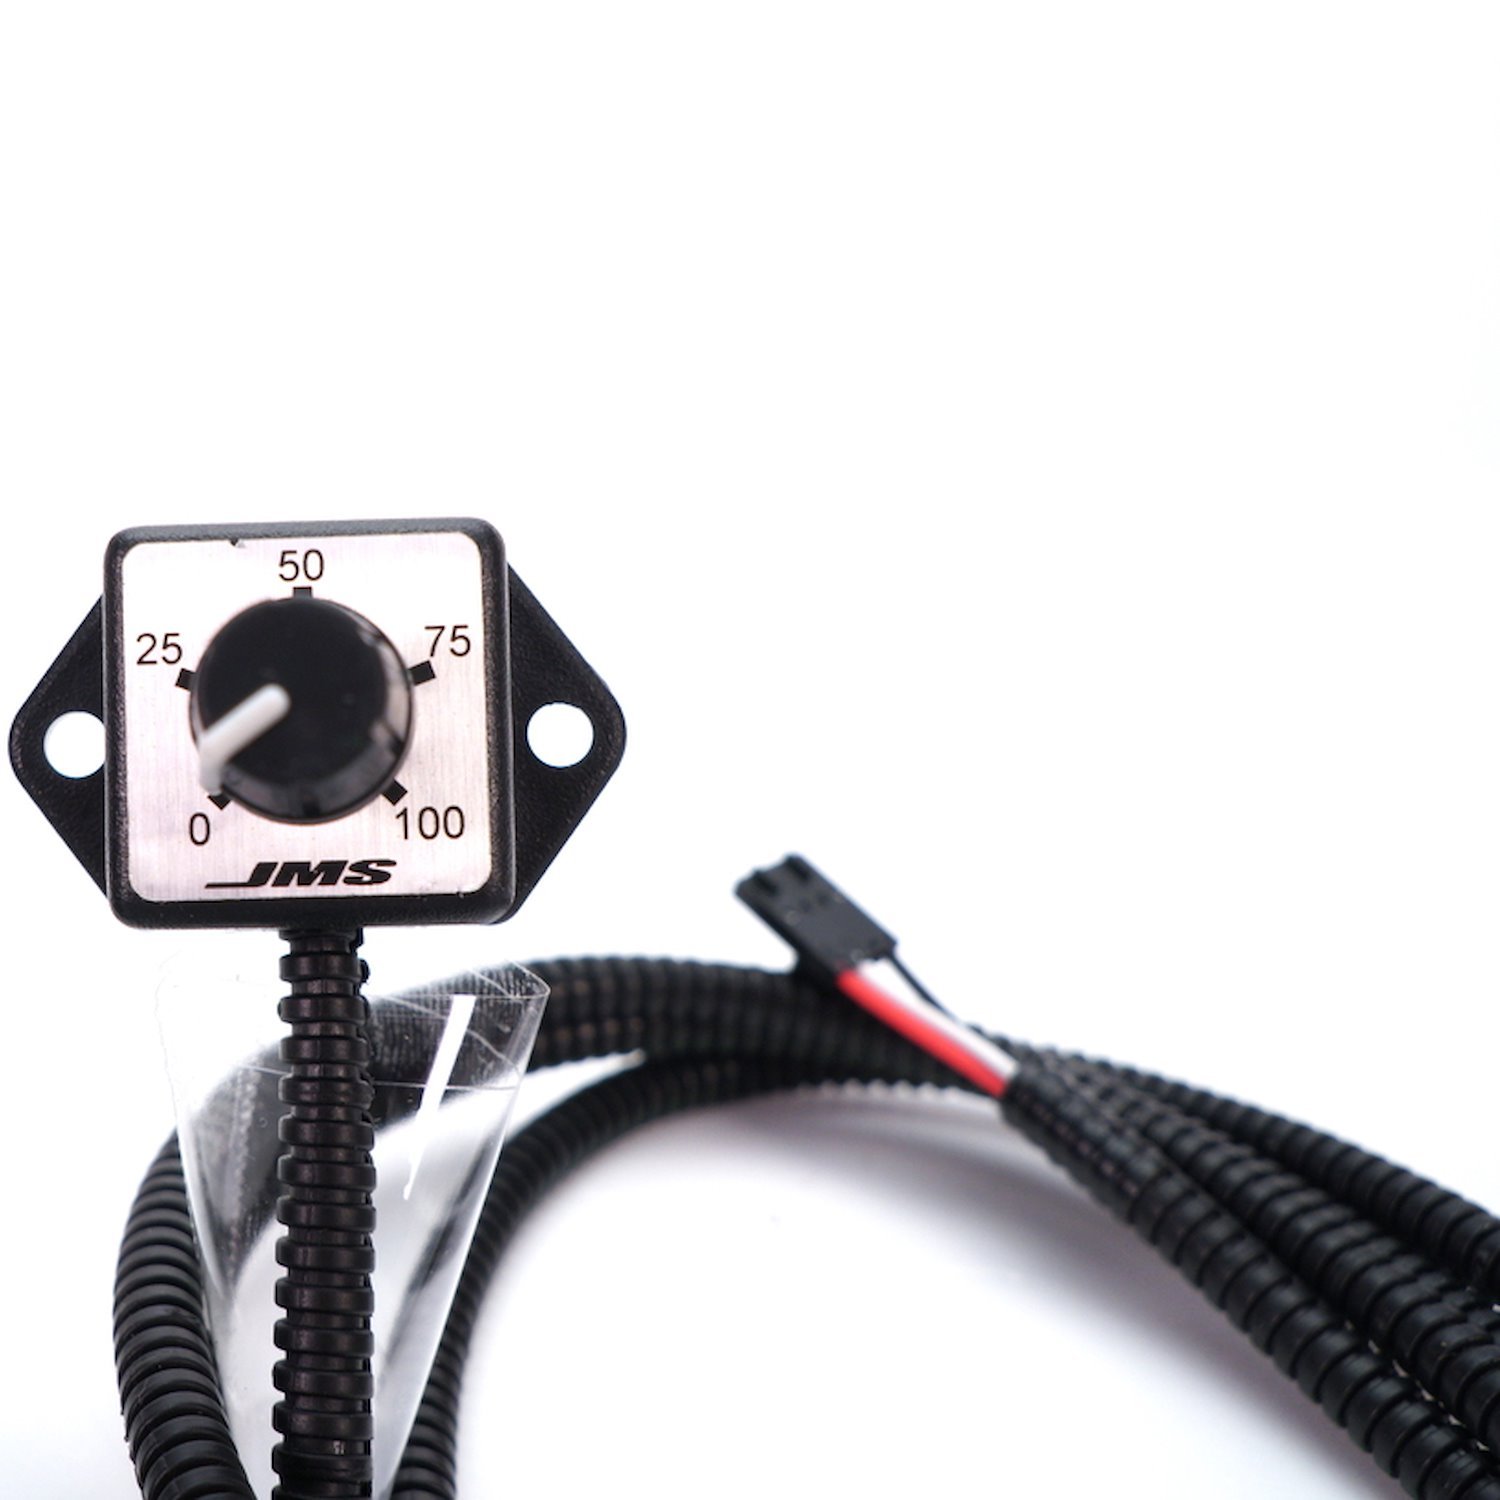 Remote Voltage Adjustment Knob Works with PedalMAX to Adjust Throttle Sensitivity